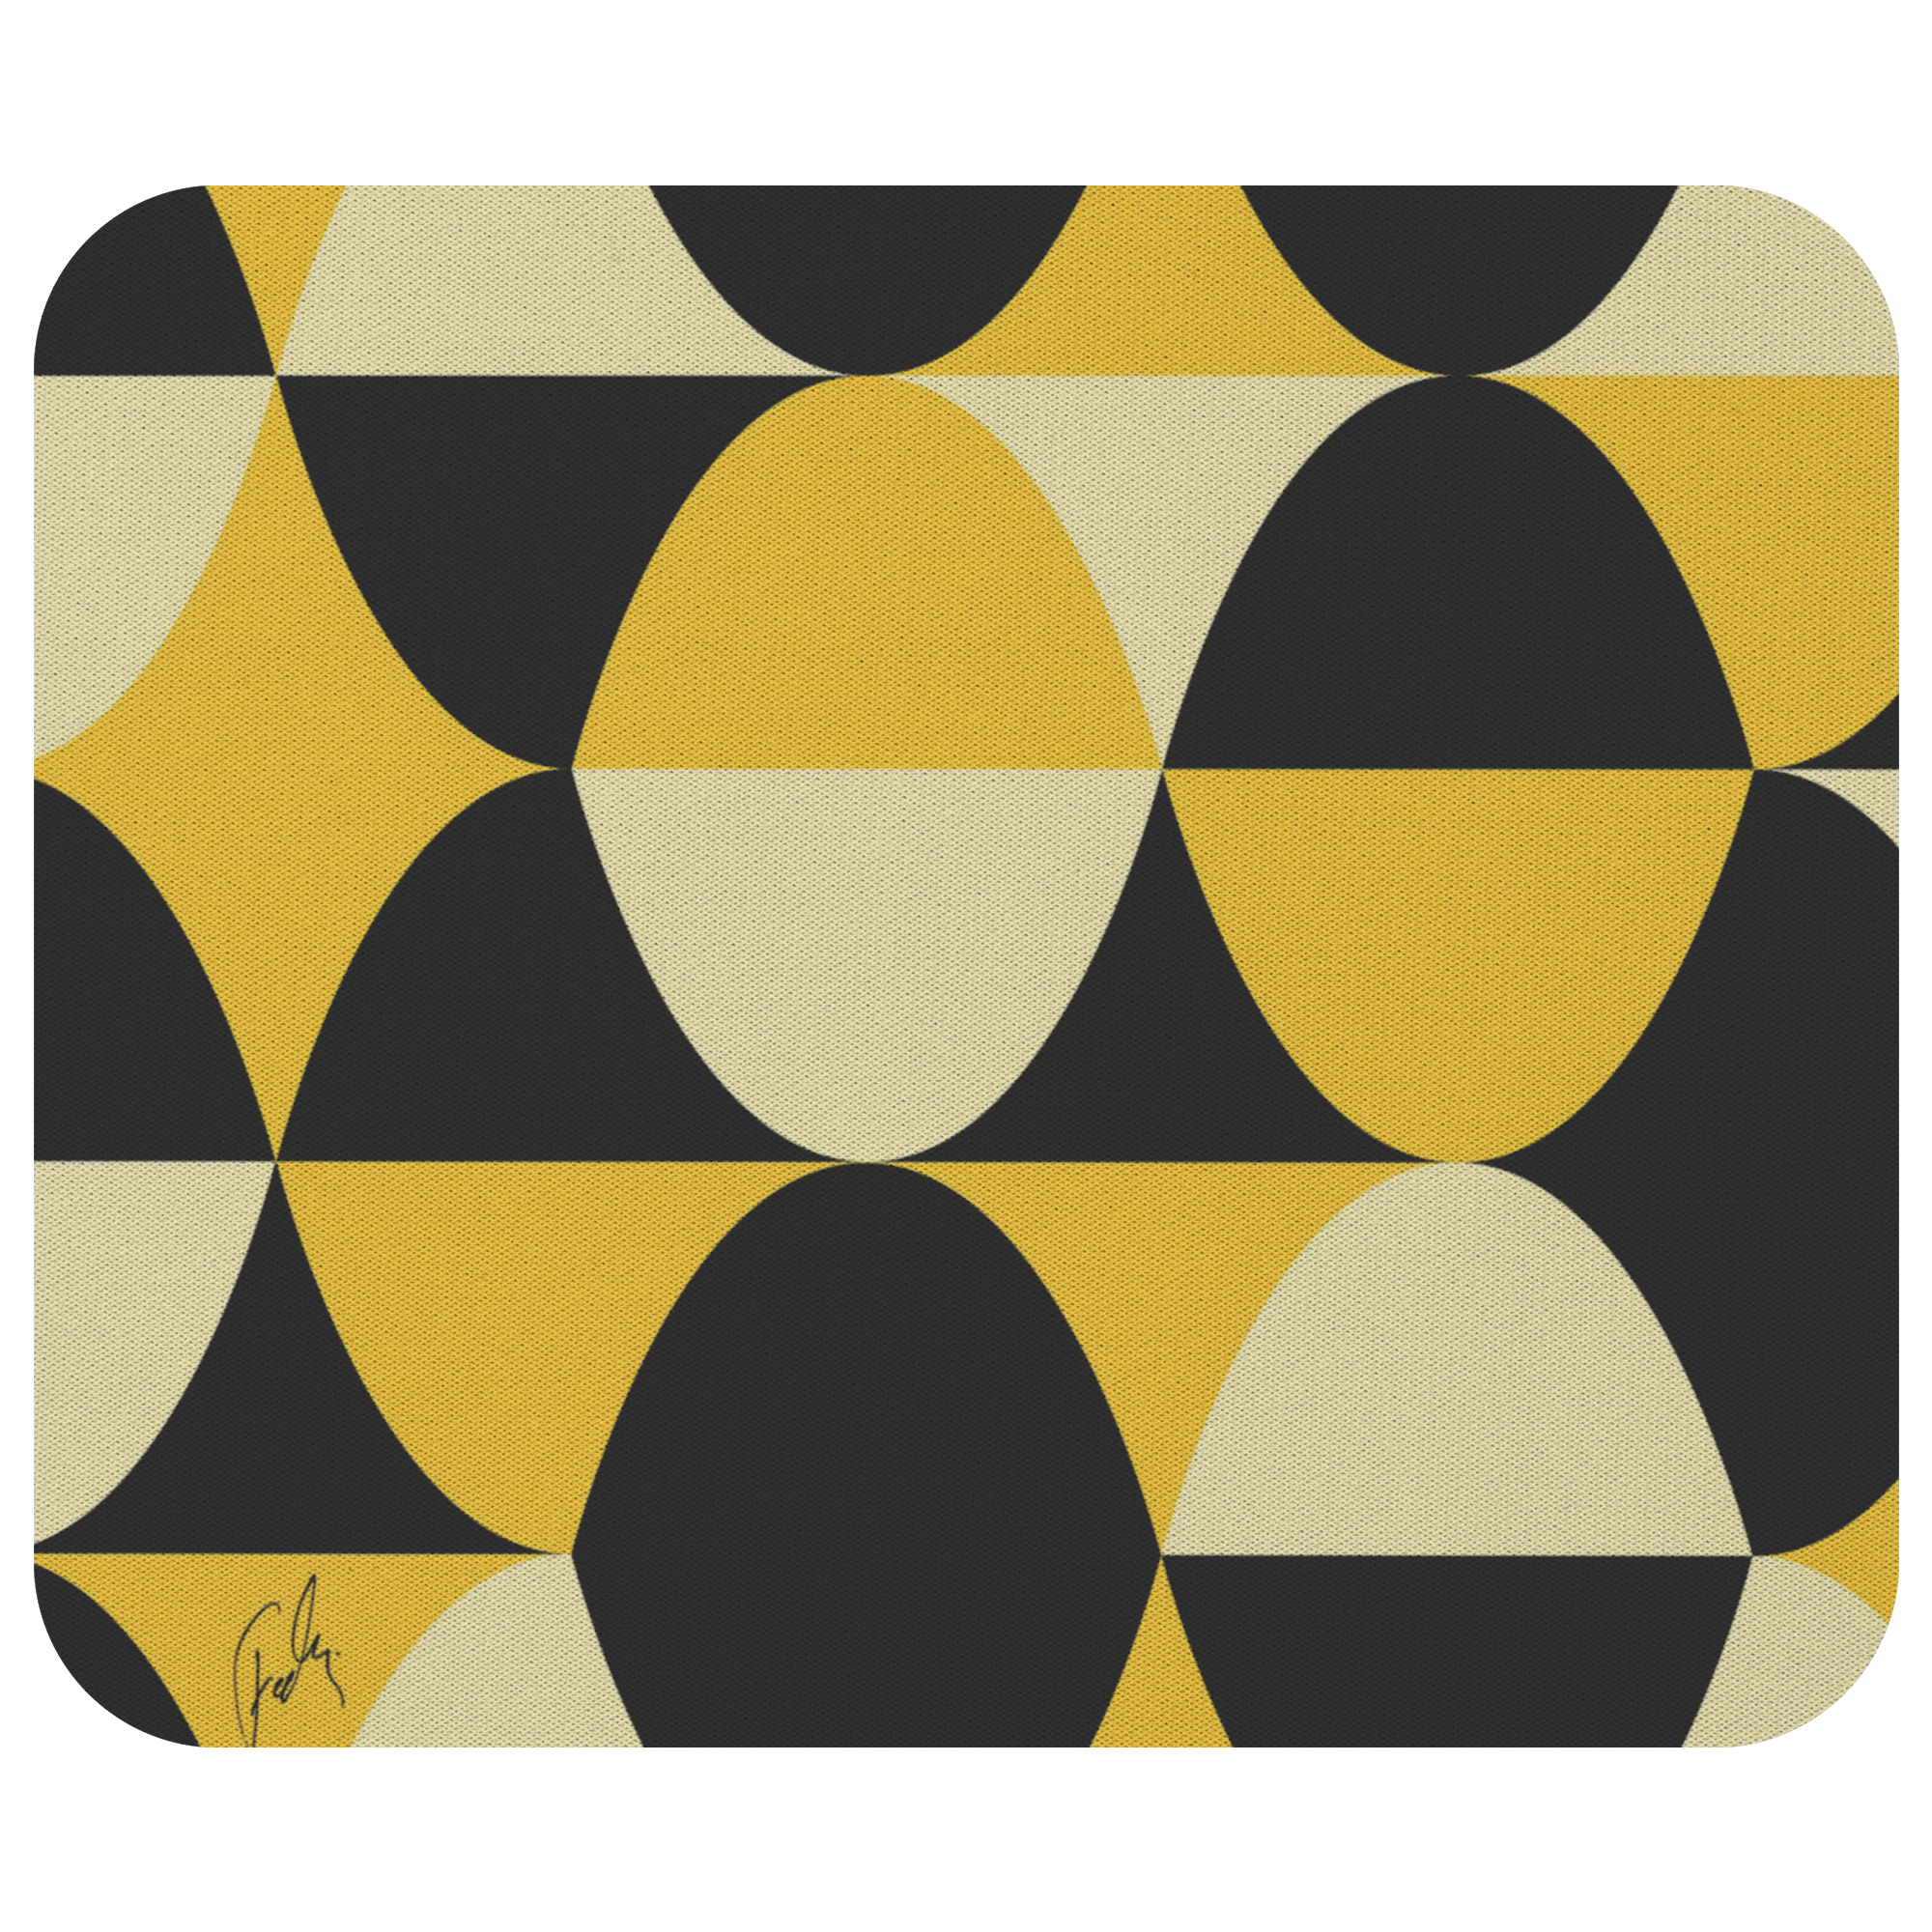 Yellow and Black Eggs | Mousepad